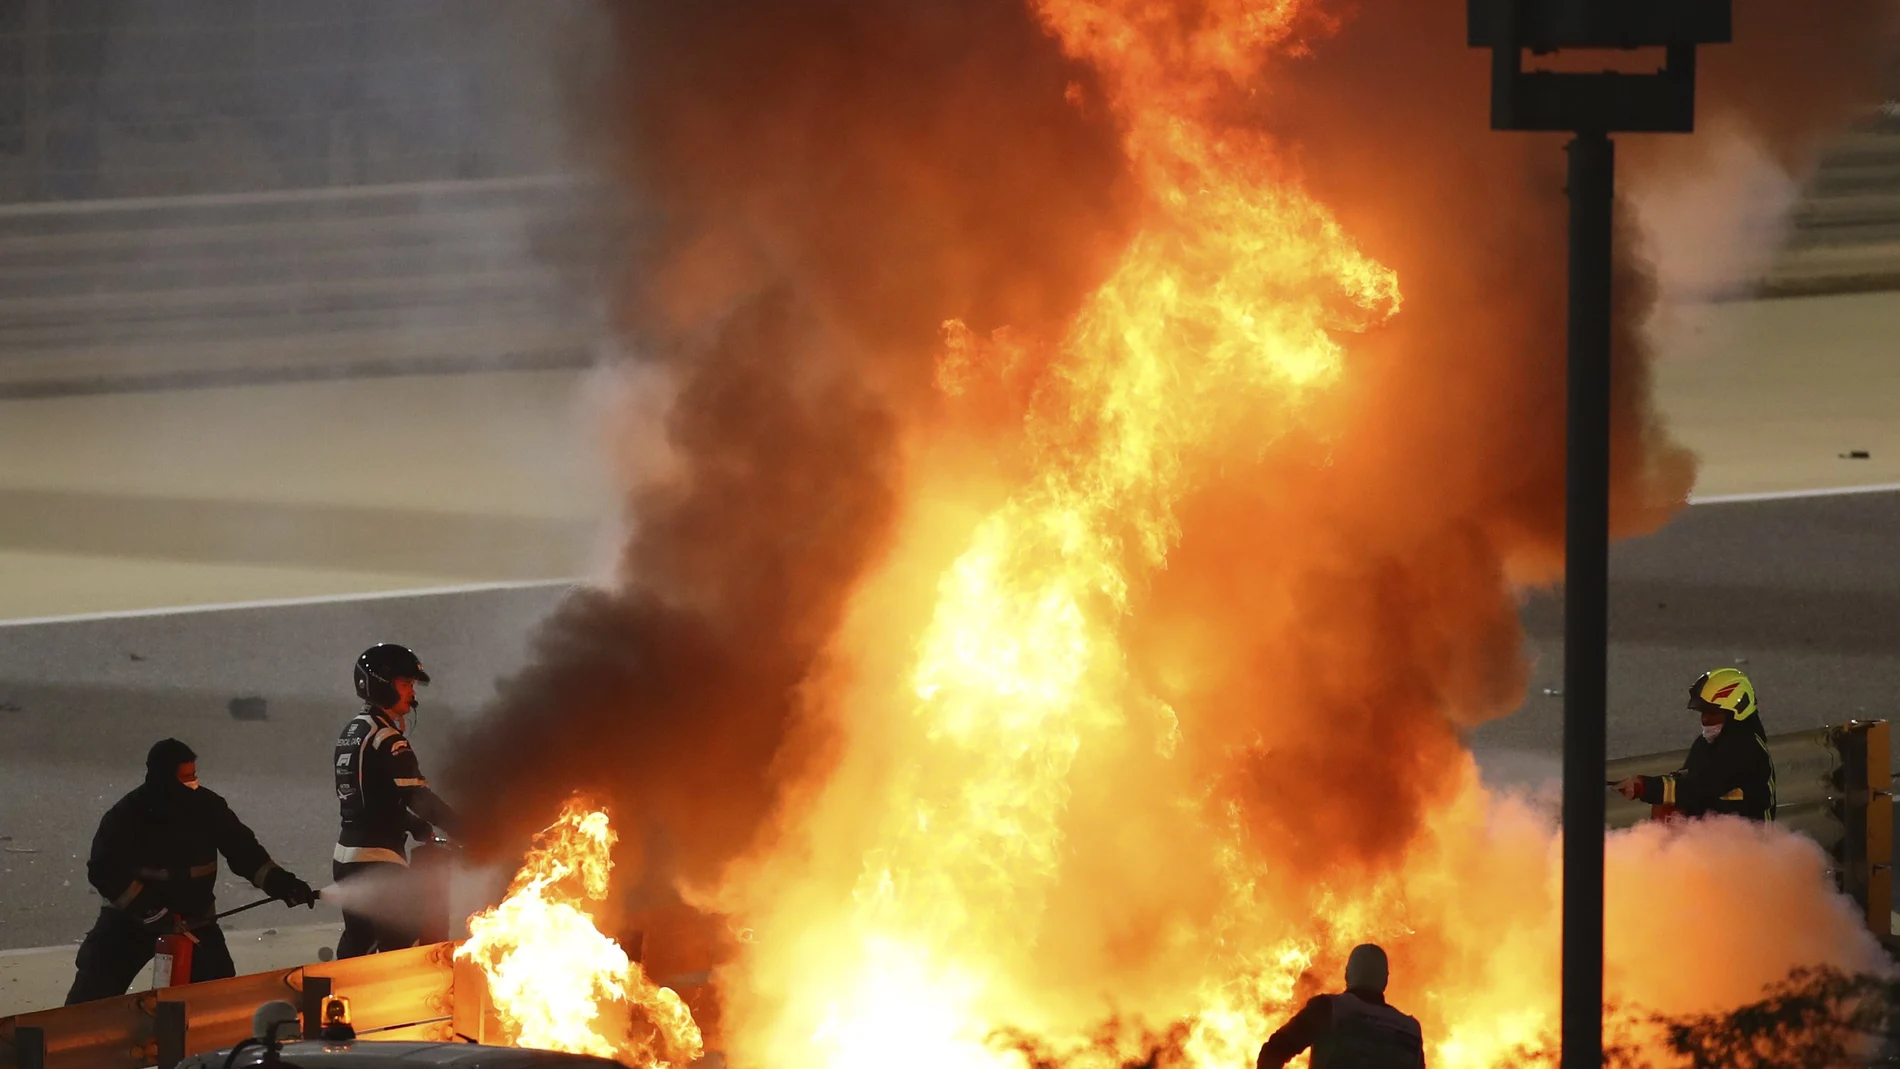 Staff extinguish flames from Haas driver Romain Grosjean of France's car after a crash during the Formula One race in Bahrain International Circuit in Sakhir, Bahrain, Sunday, Nov. 29, 2020. (Brynn Lennon, Pool via AP)